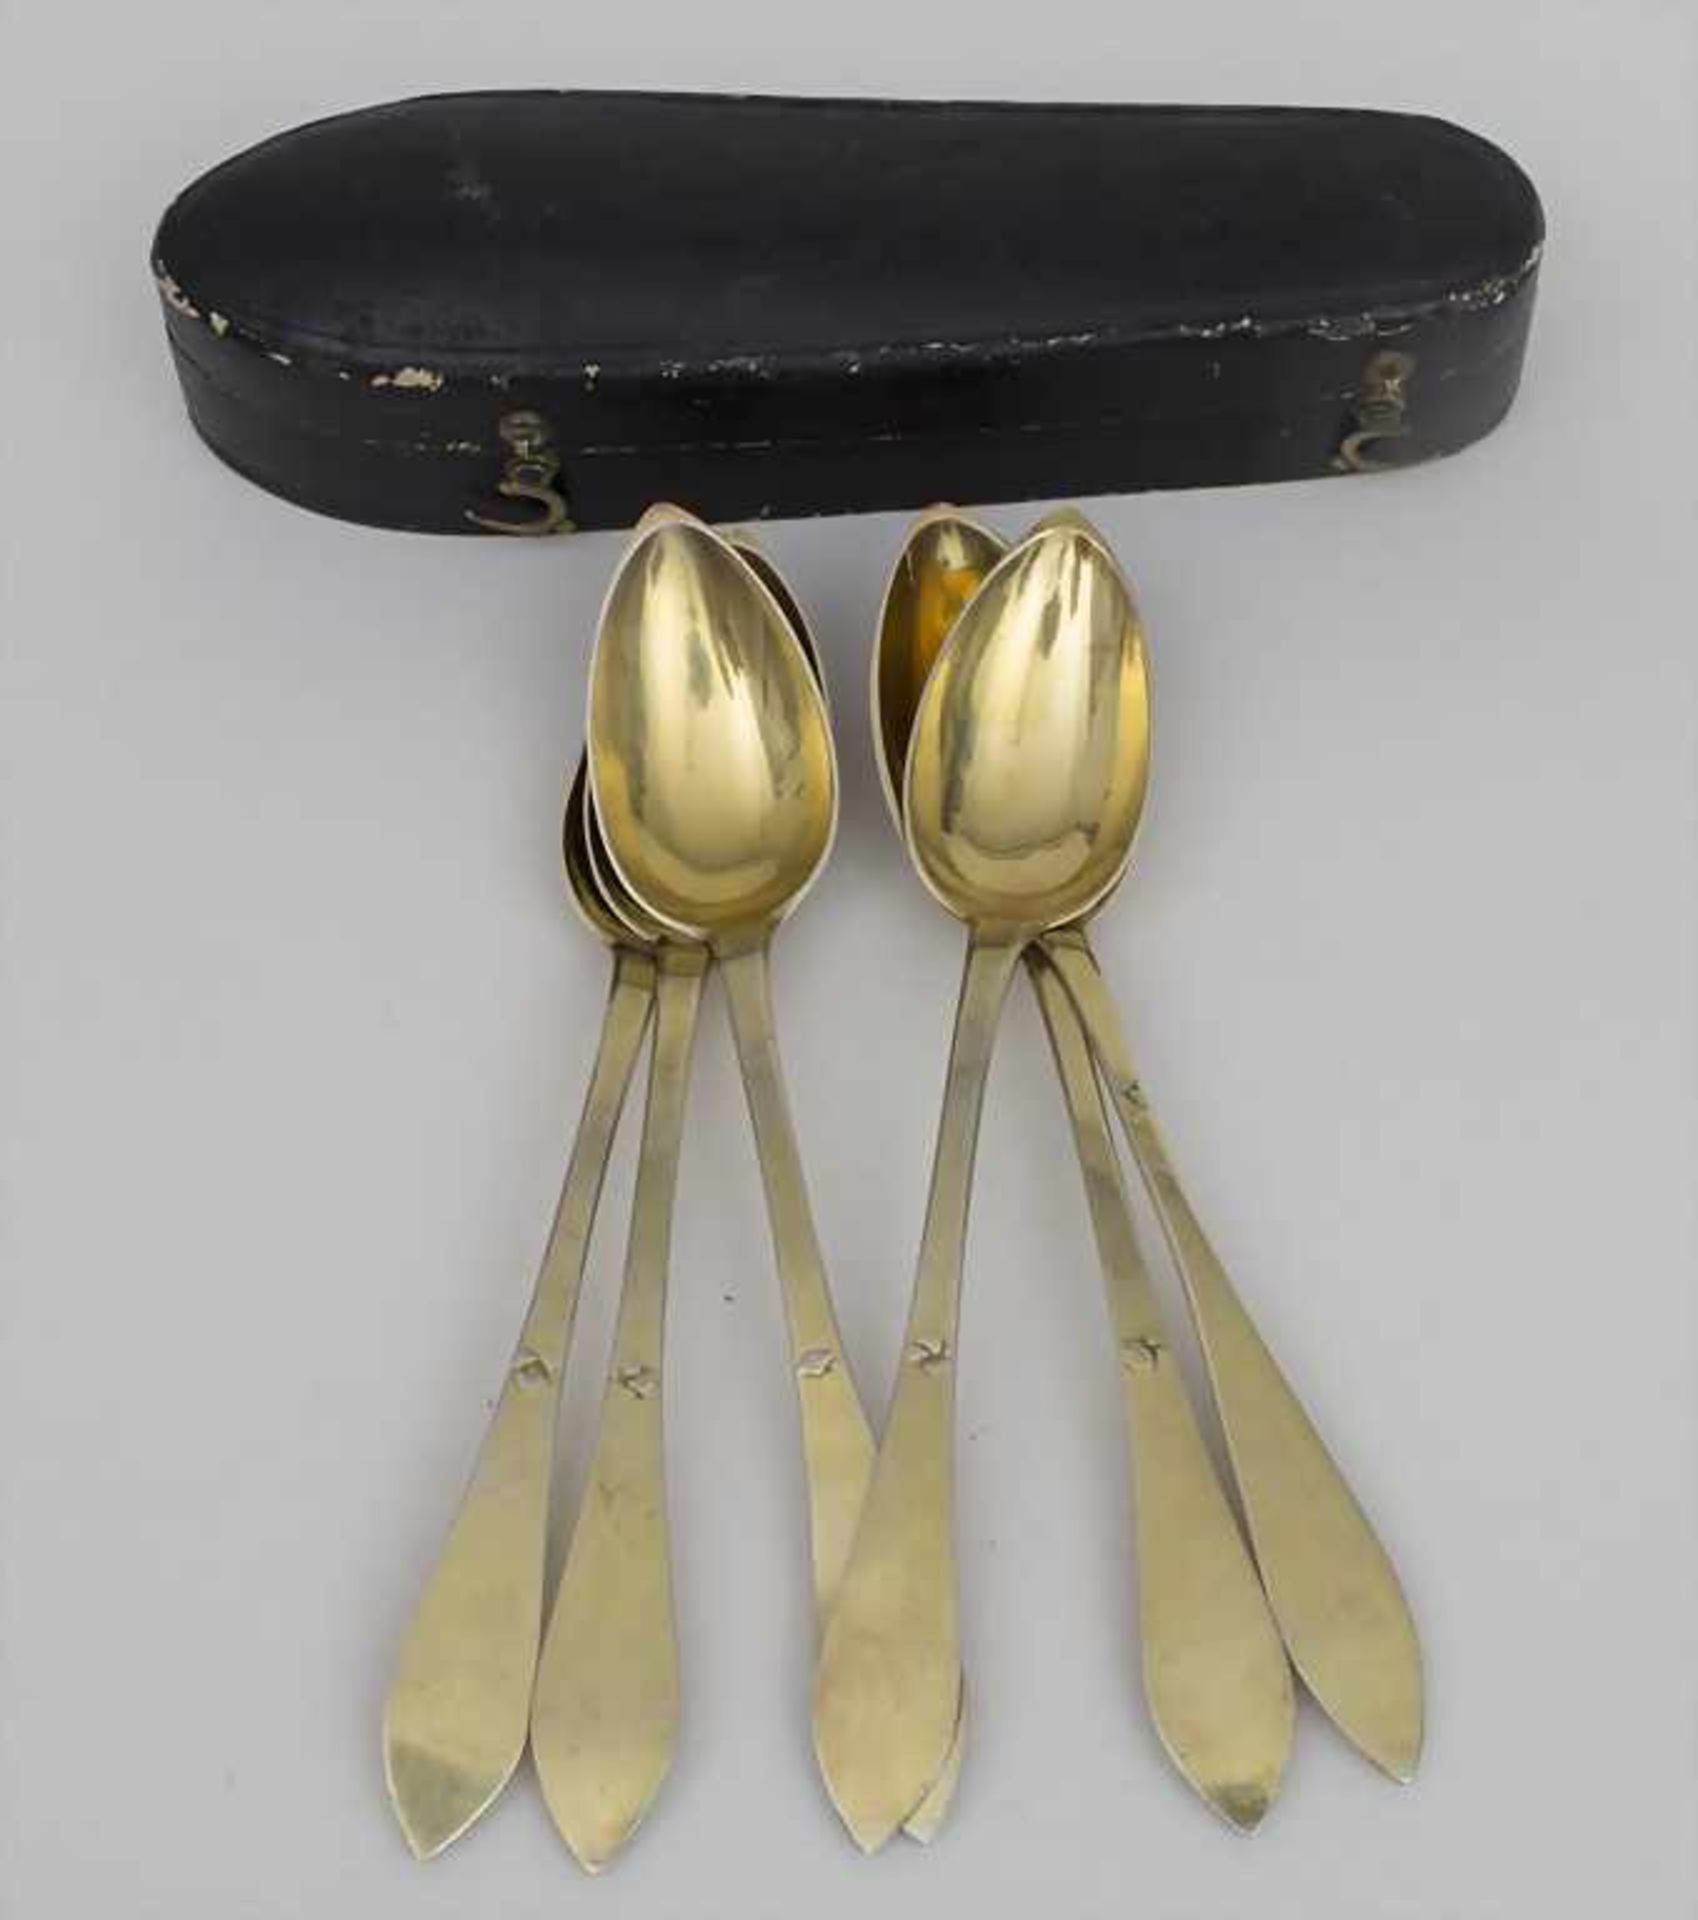 6 Teelöffel / 6 tea spoons, Siegel, Straßburg / Strasbourg, um 1820 Material: Silber 800,